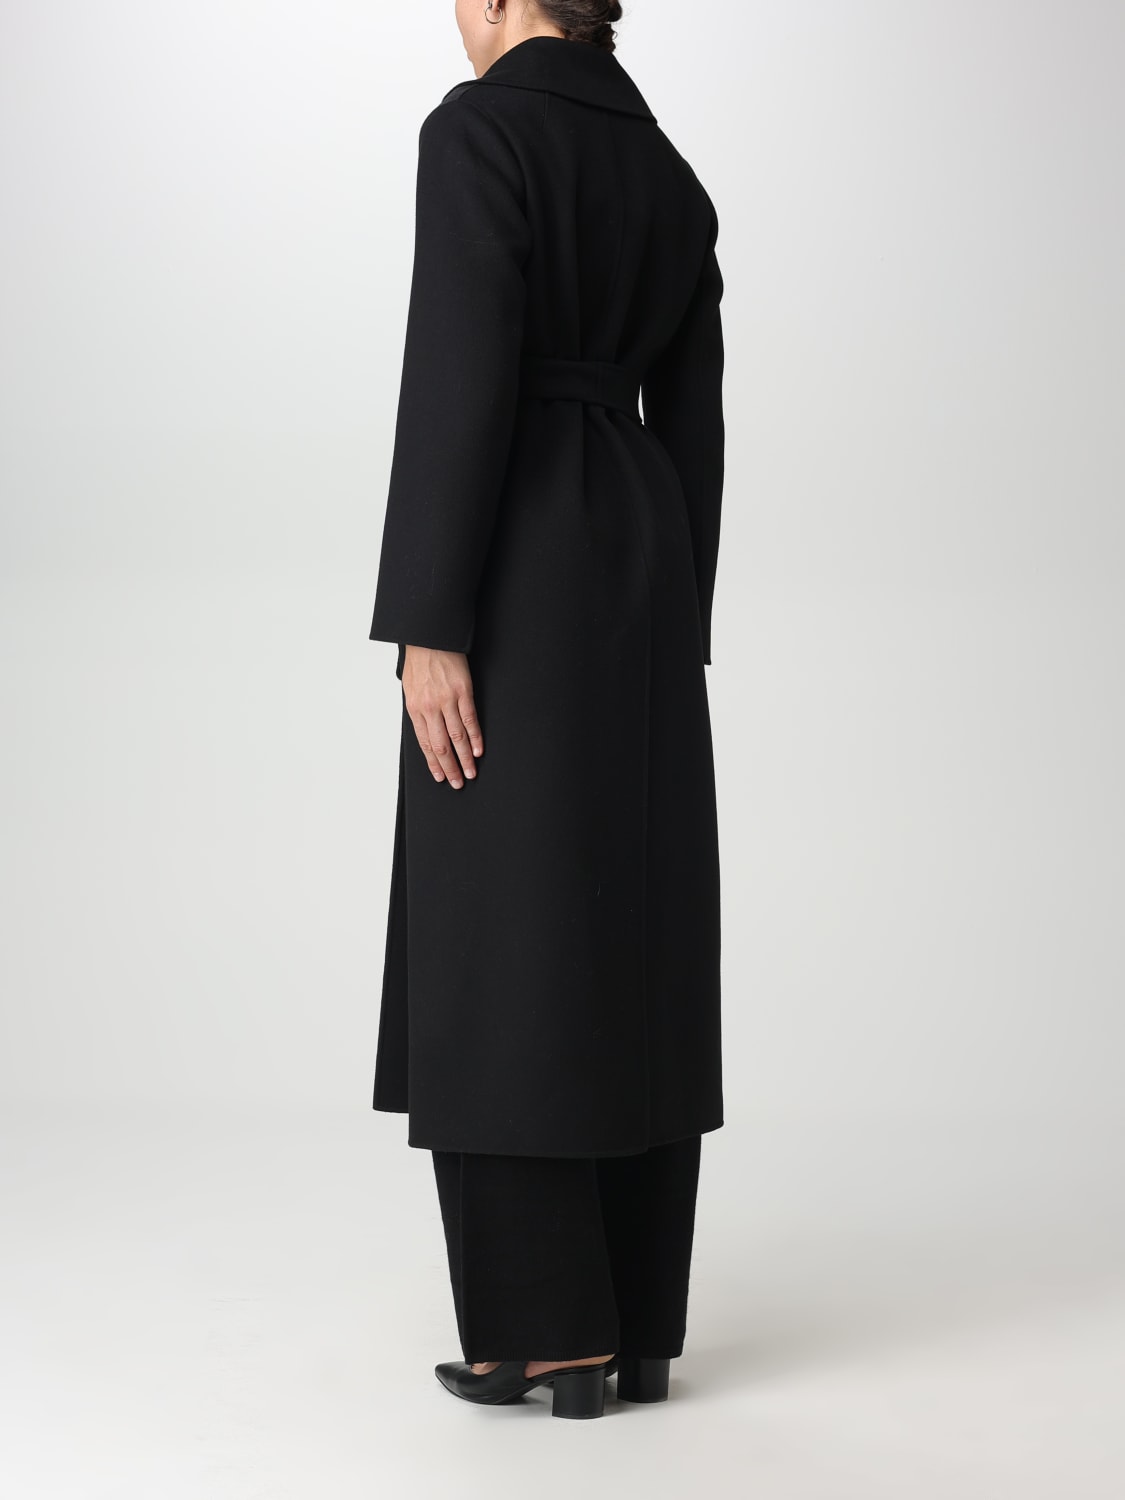 S MAX MARA: Poldo coat in virgin wool - Black | S Max Mara coat ...